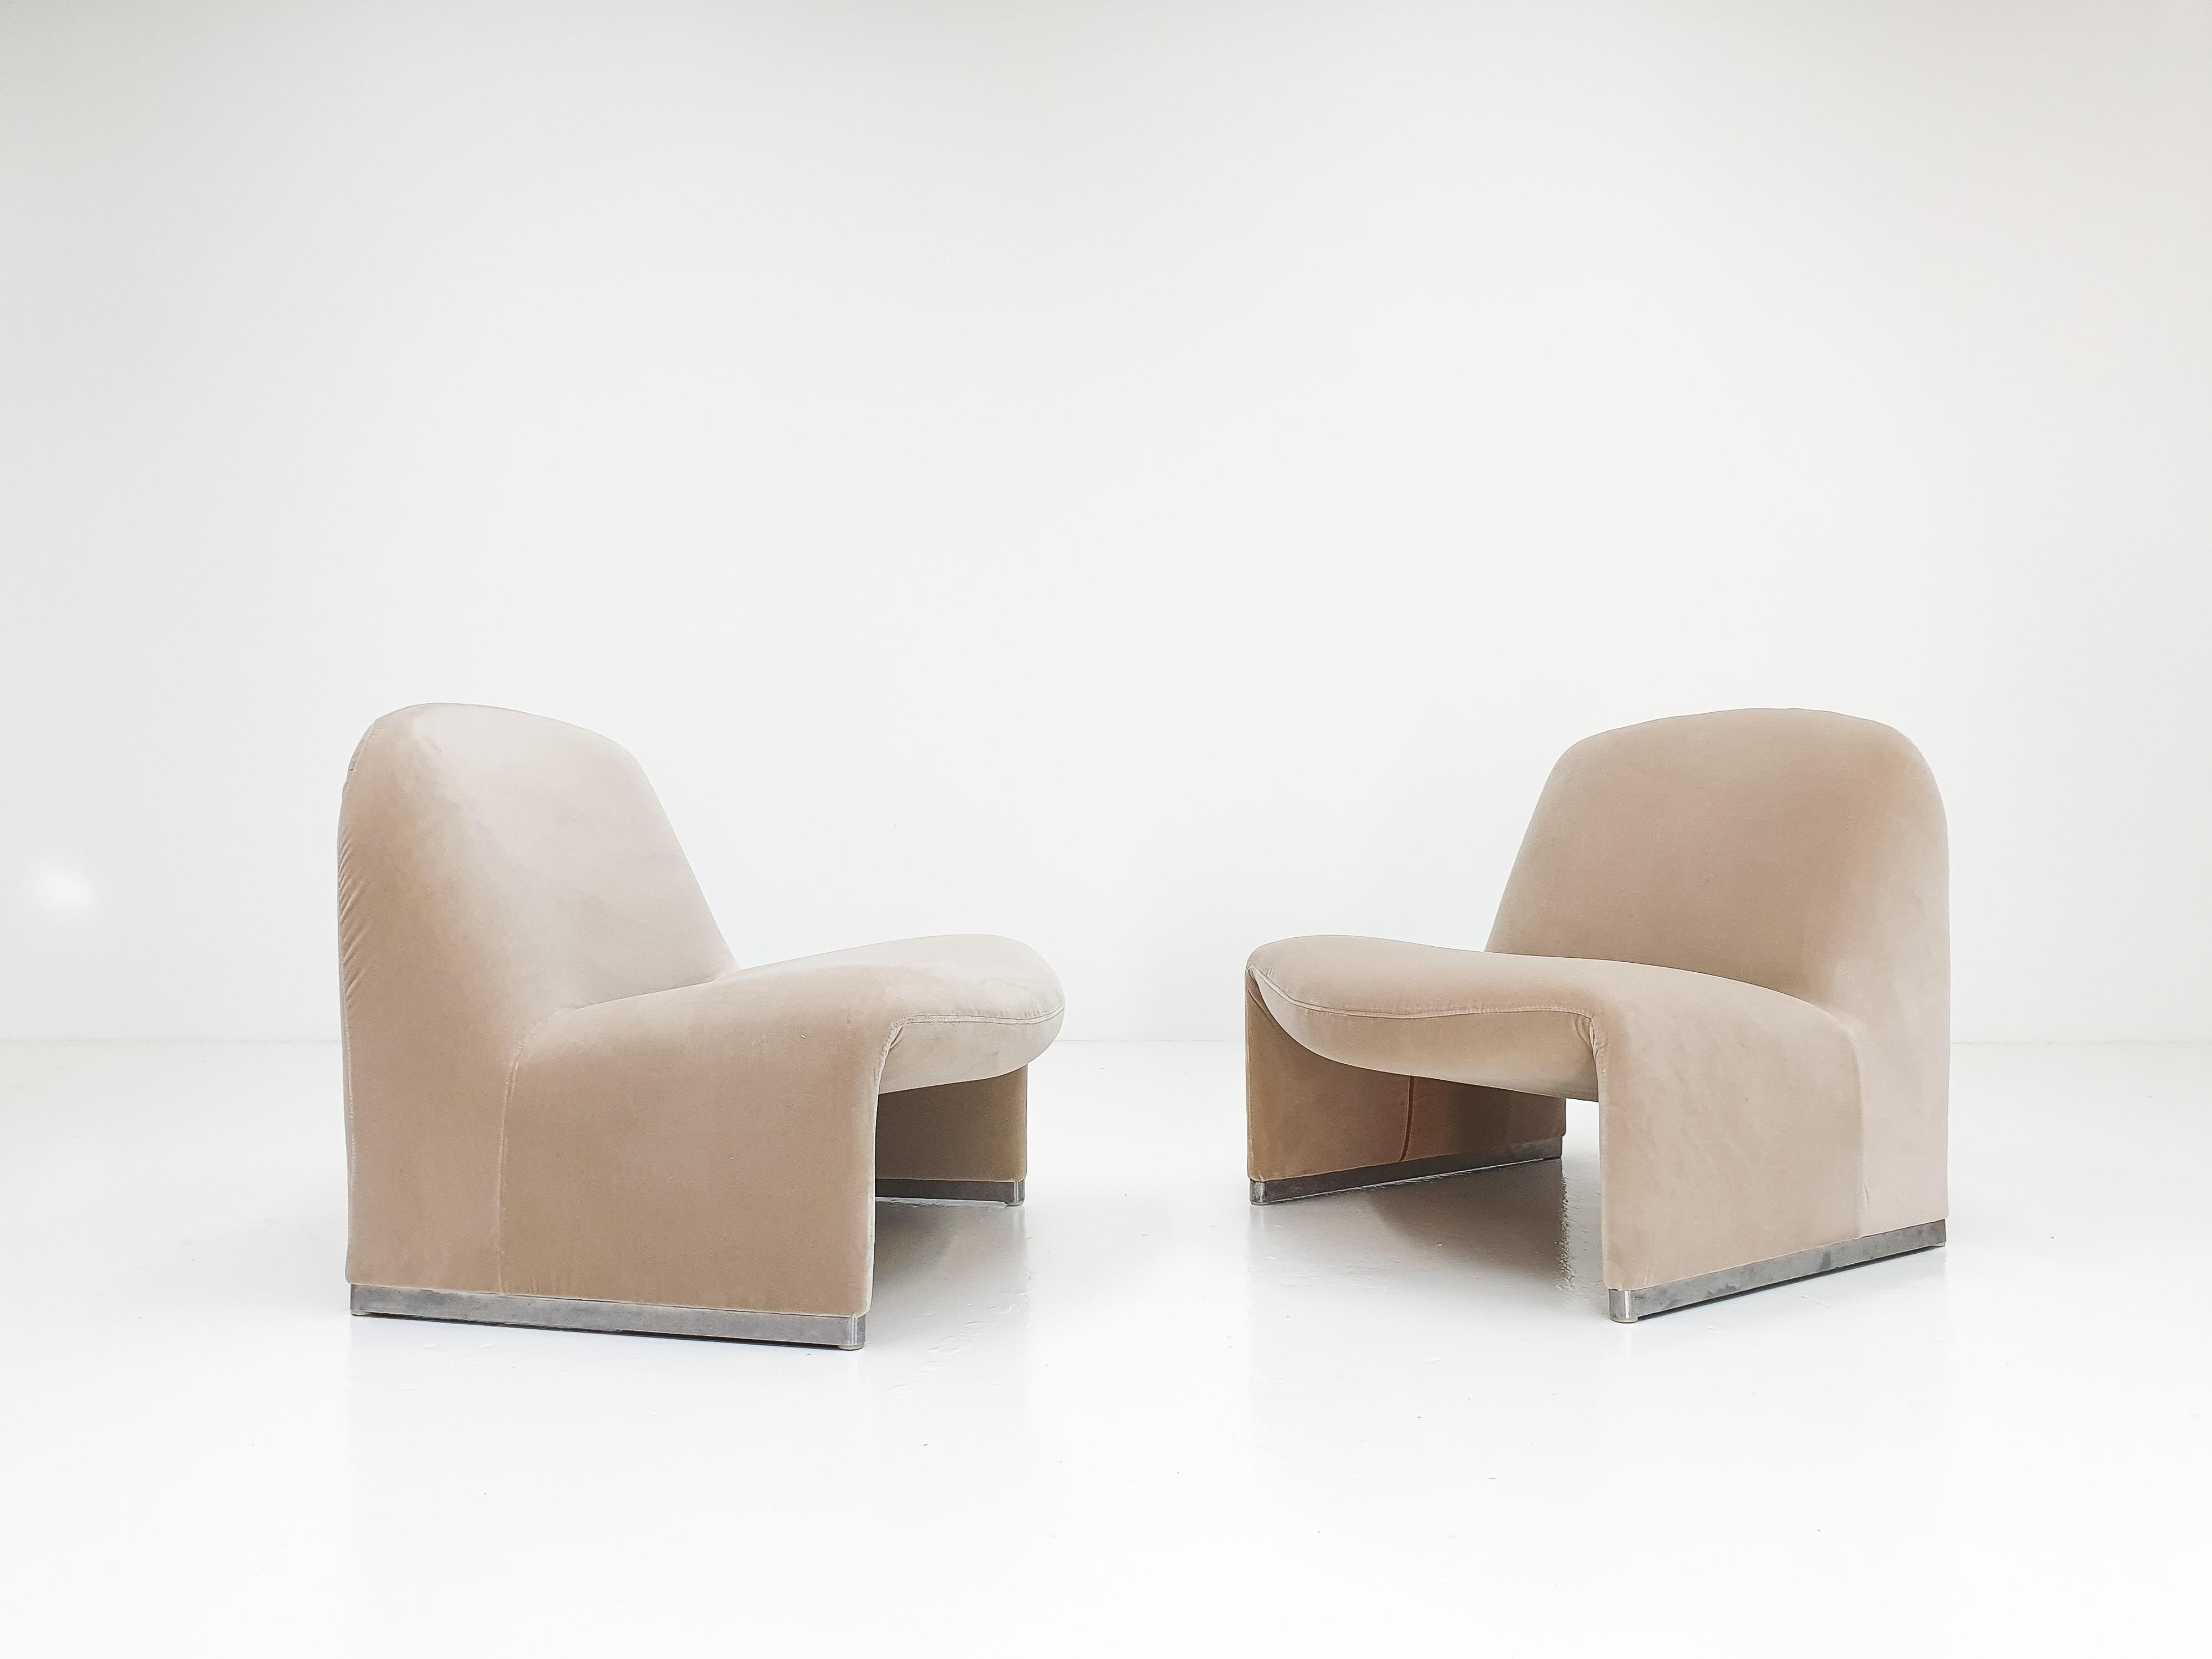 Pair of Giancarlo Piretti “Alky” Chairs in New Velvet, Artifort, 1970s In Good Condition In London Road, Baldock, Hertfordshire